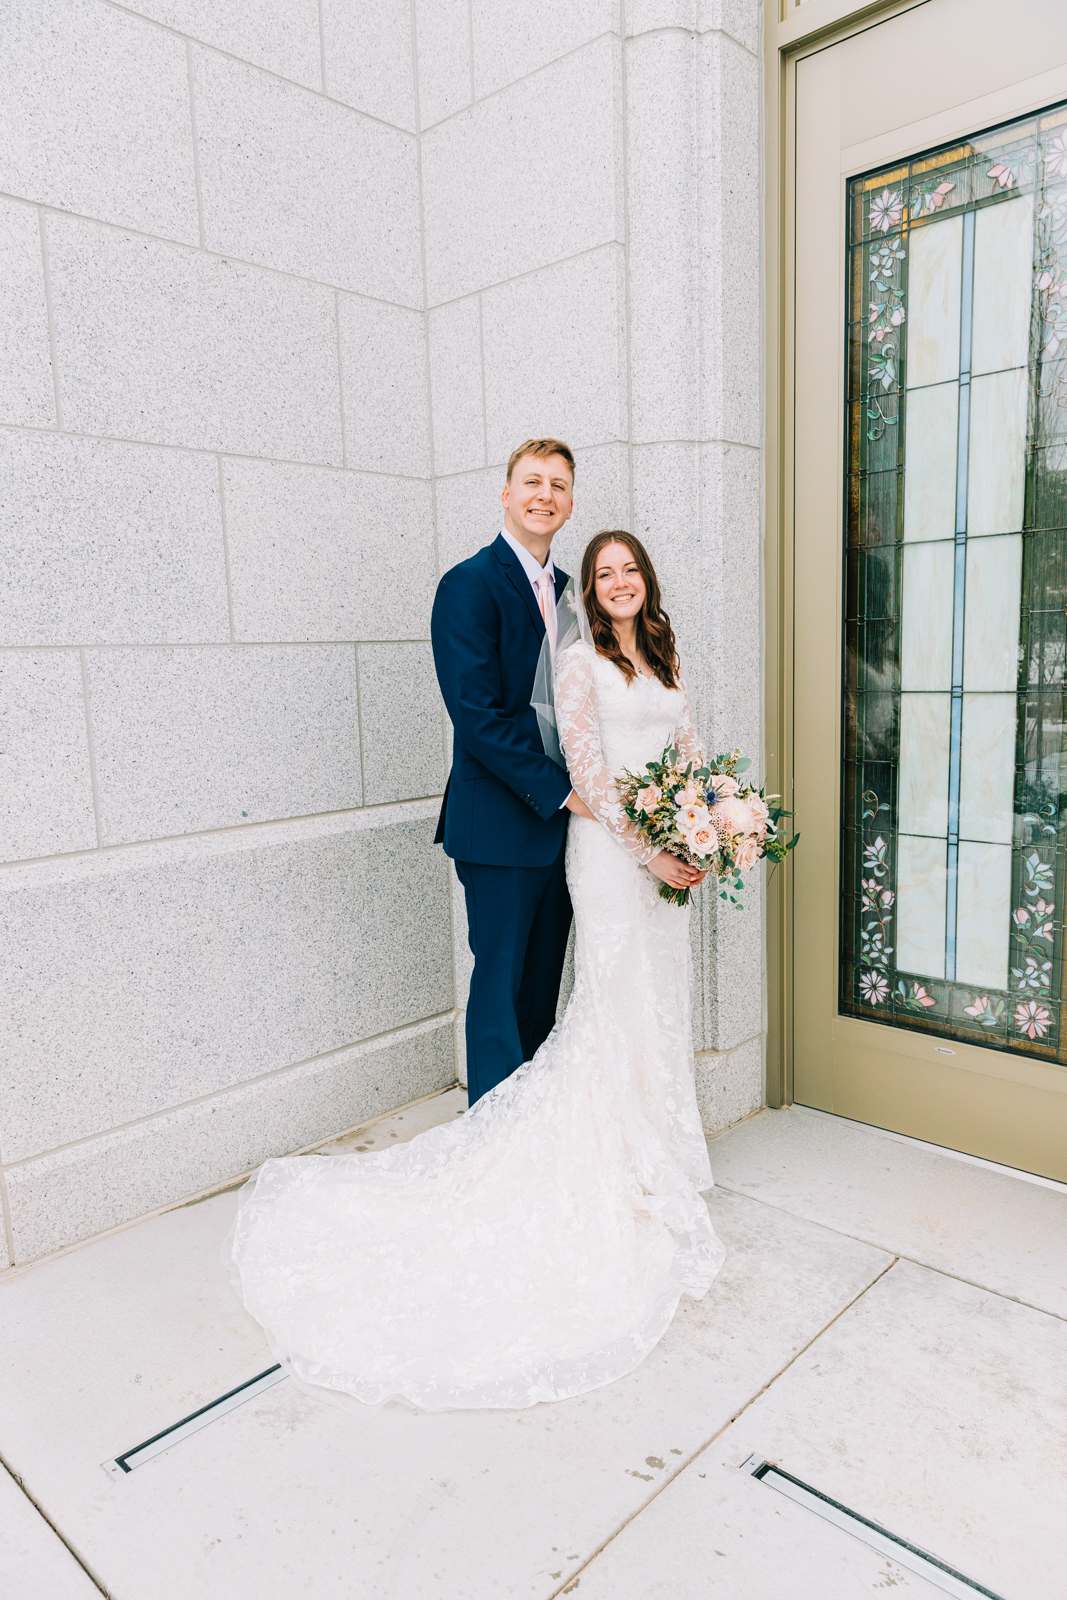 Jackson Hole wedding photographer captures posed bride and groom